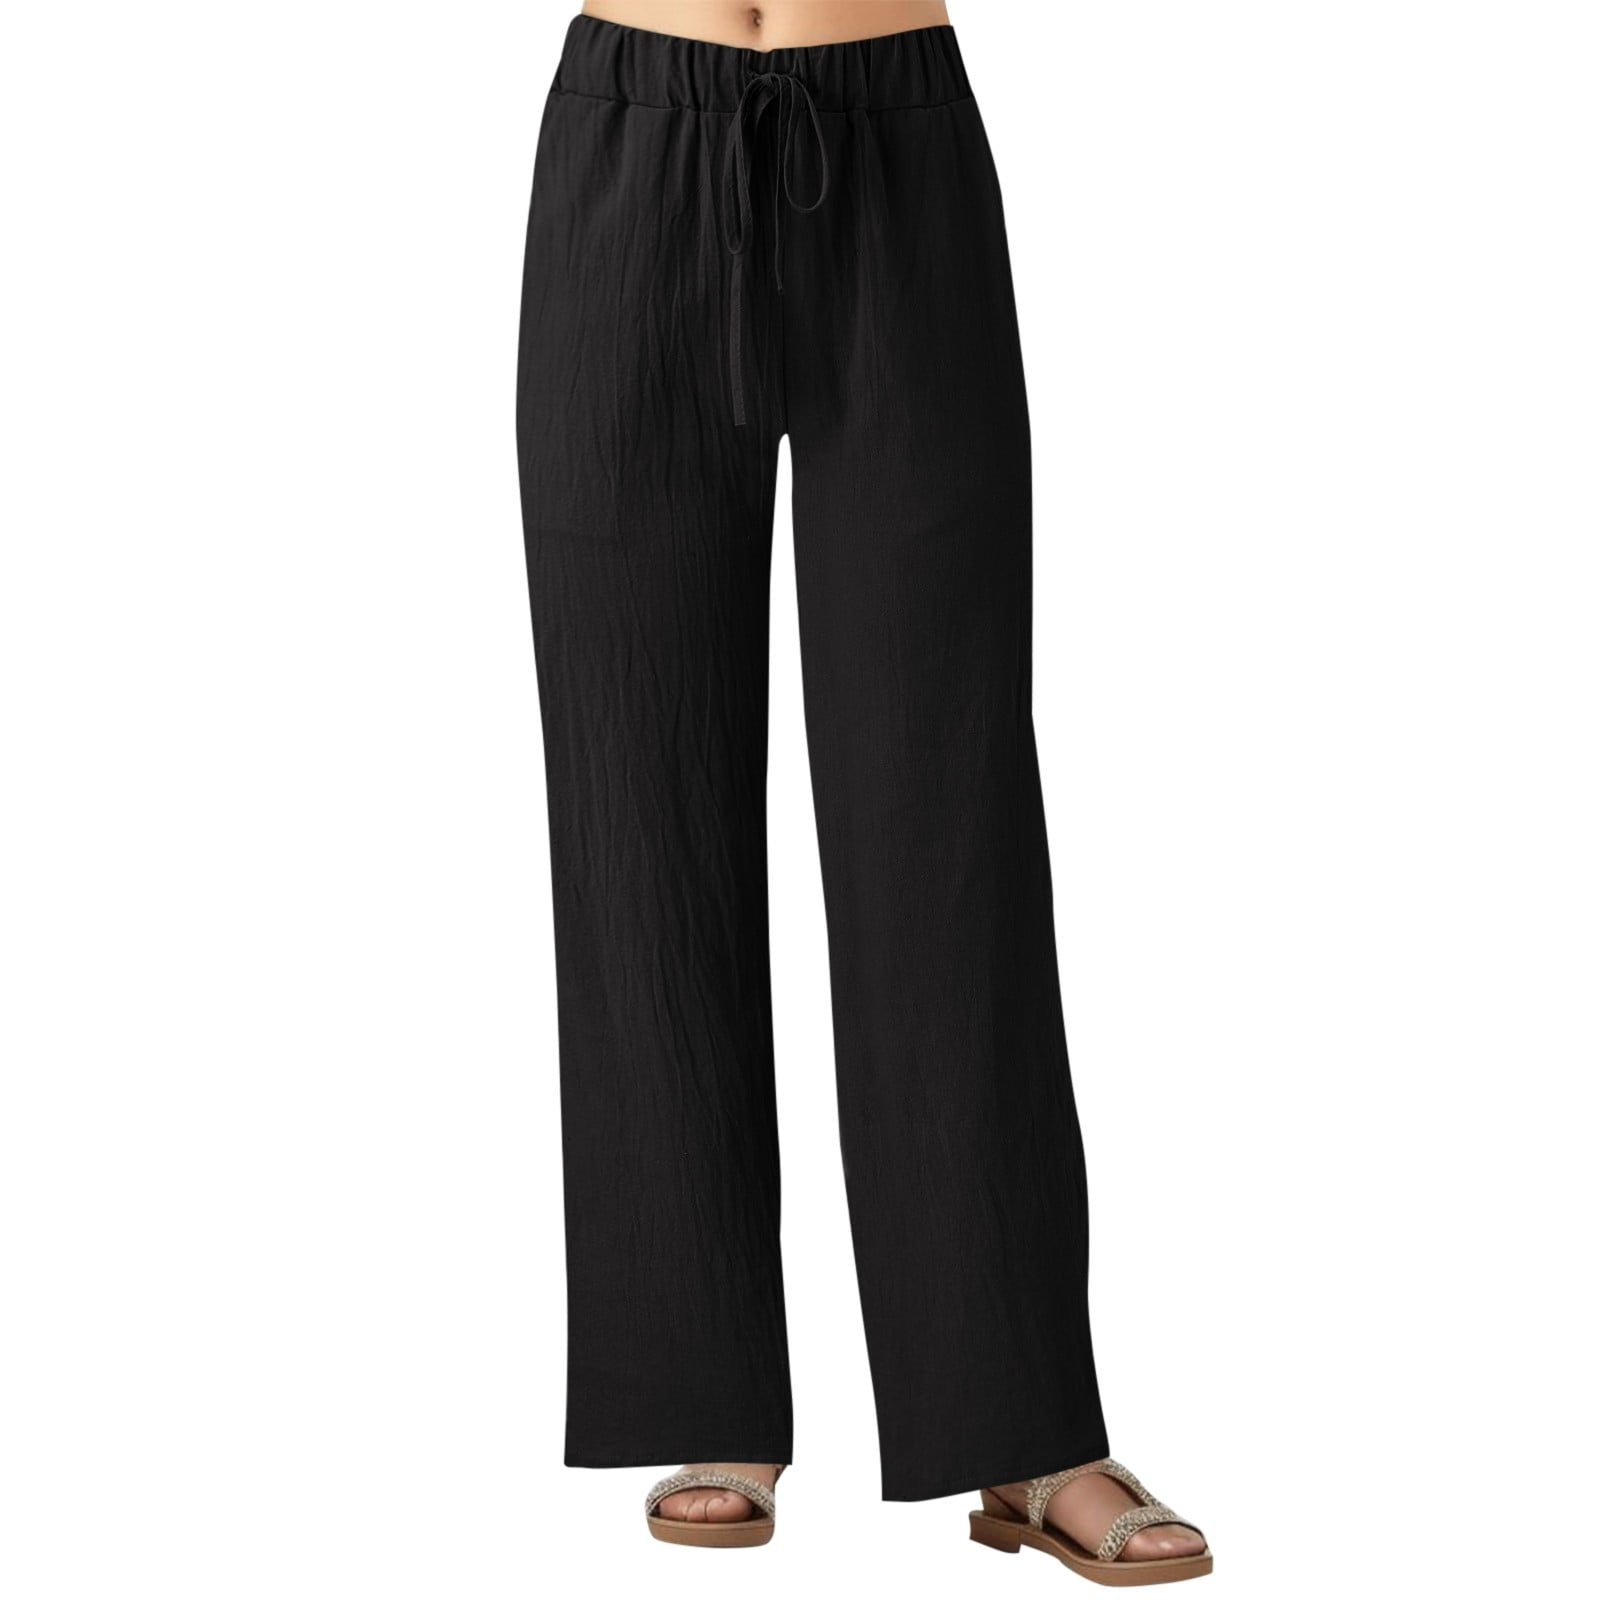 WEAIXIMIUNG Capri Pants for Women Petite Short Pocket Pants Wide Loose ...